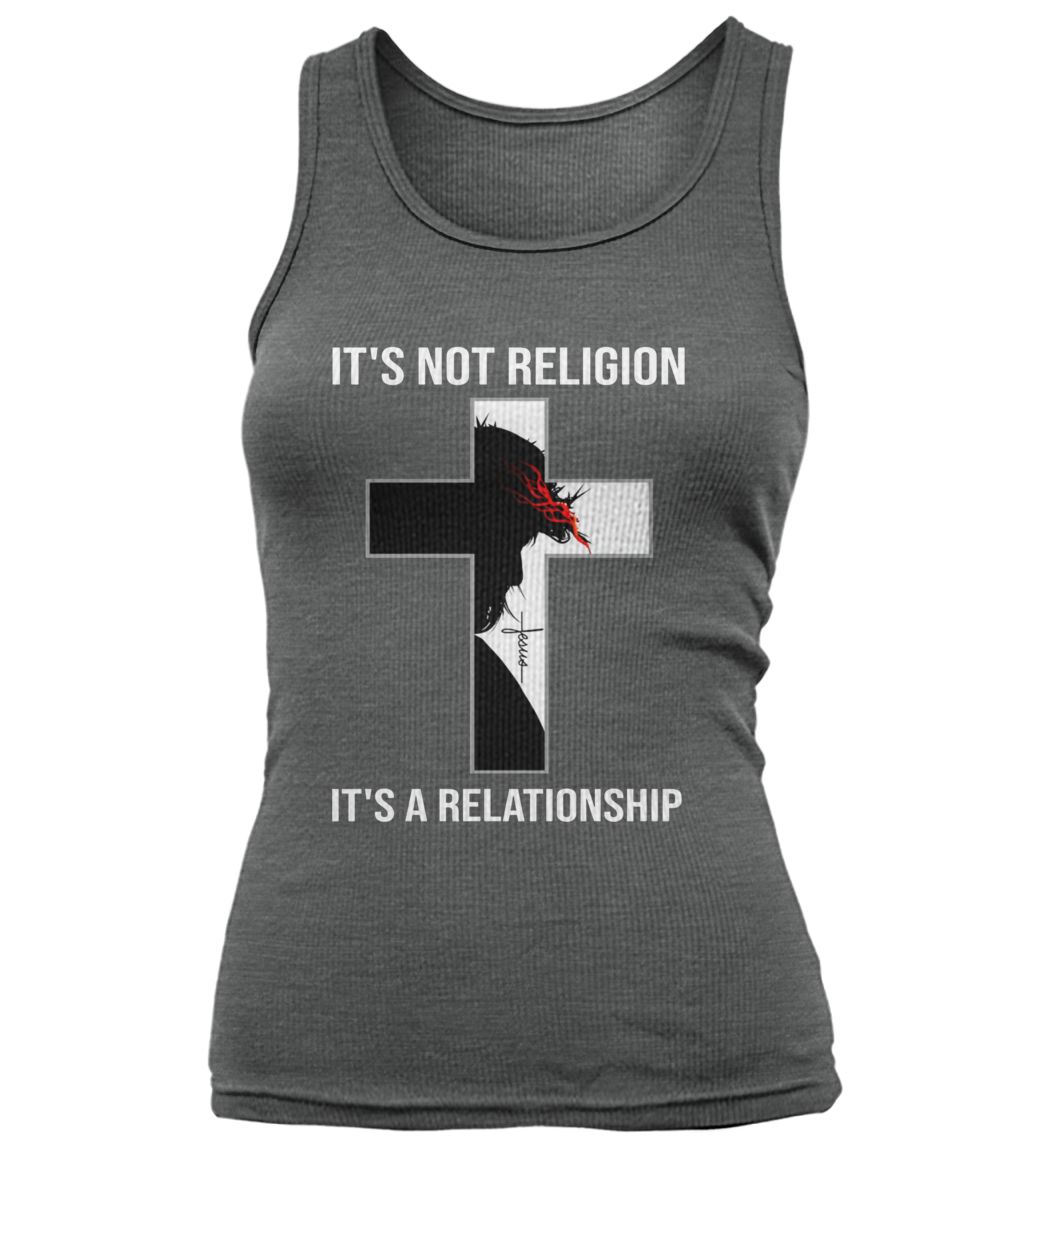 Jesus it's not religion it's a relationship women's tank top